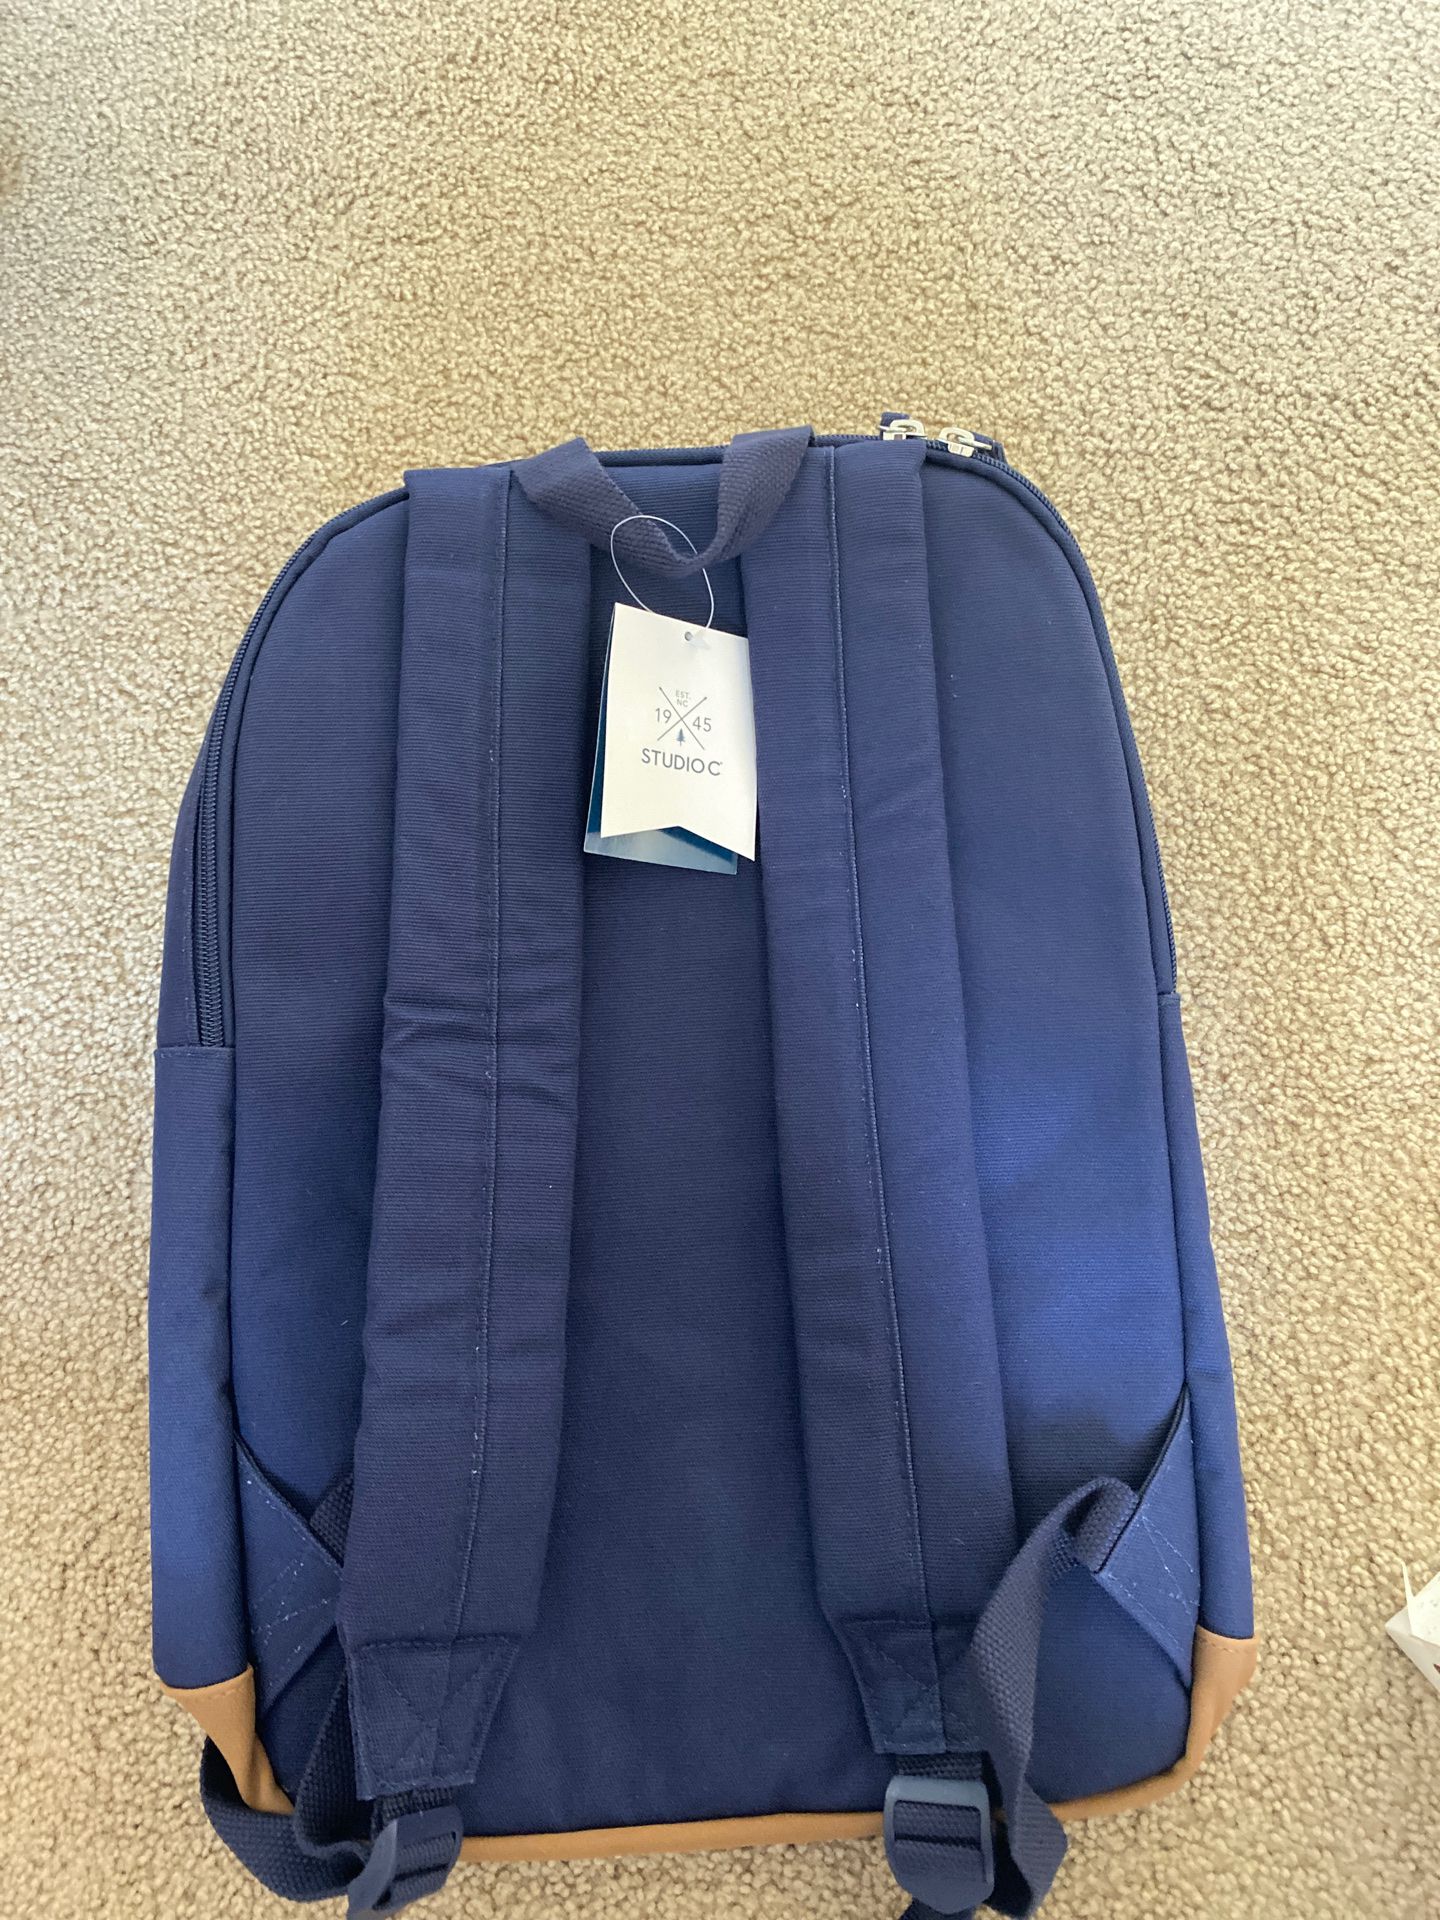 NEW Studio C Backpack Laptop/Tablet/ All PURPOSE Backpack